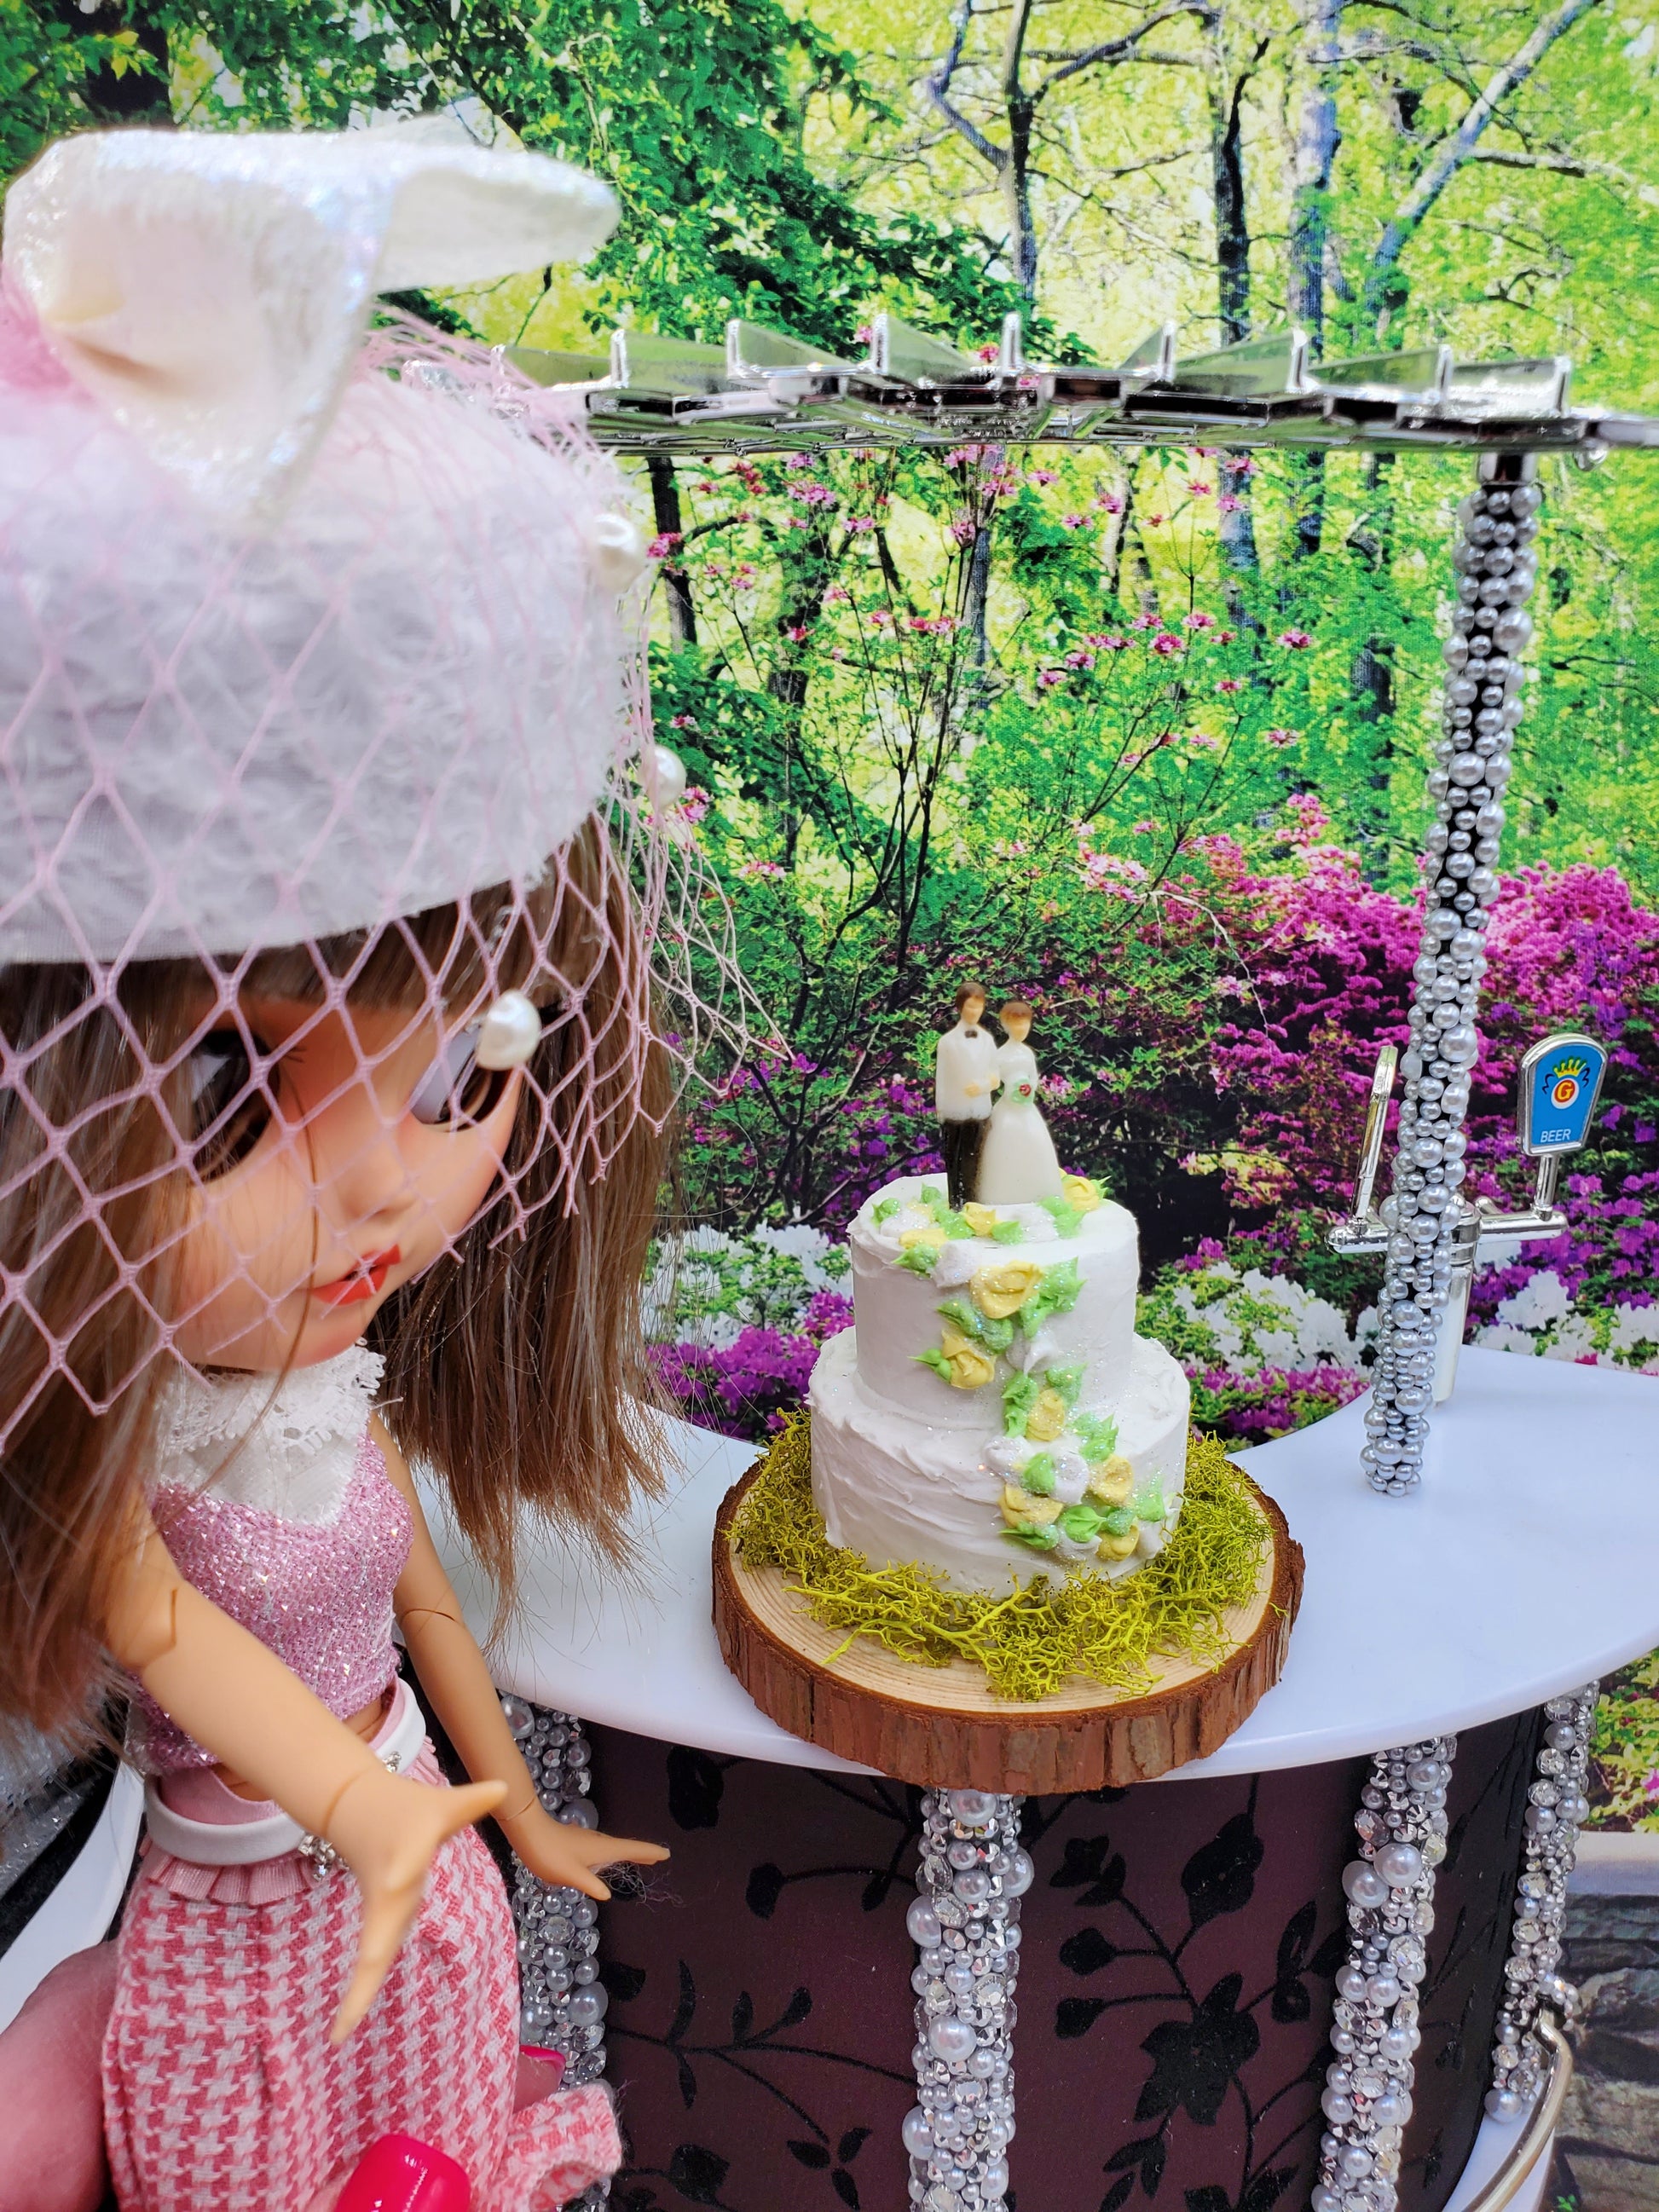 Blythe with a wedding cake